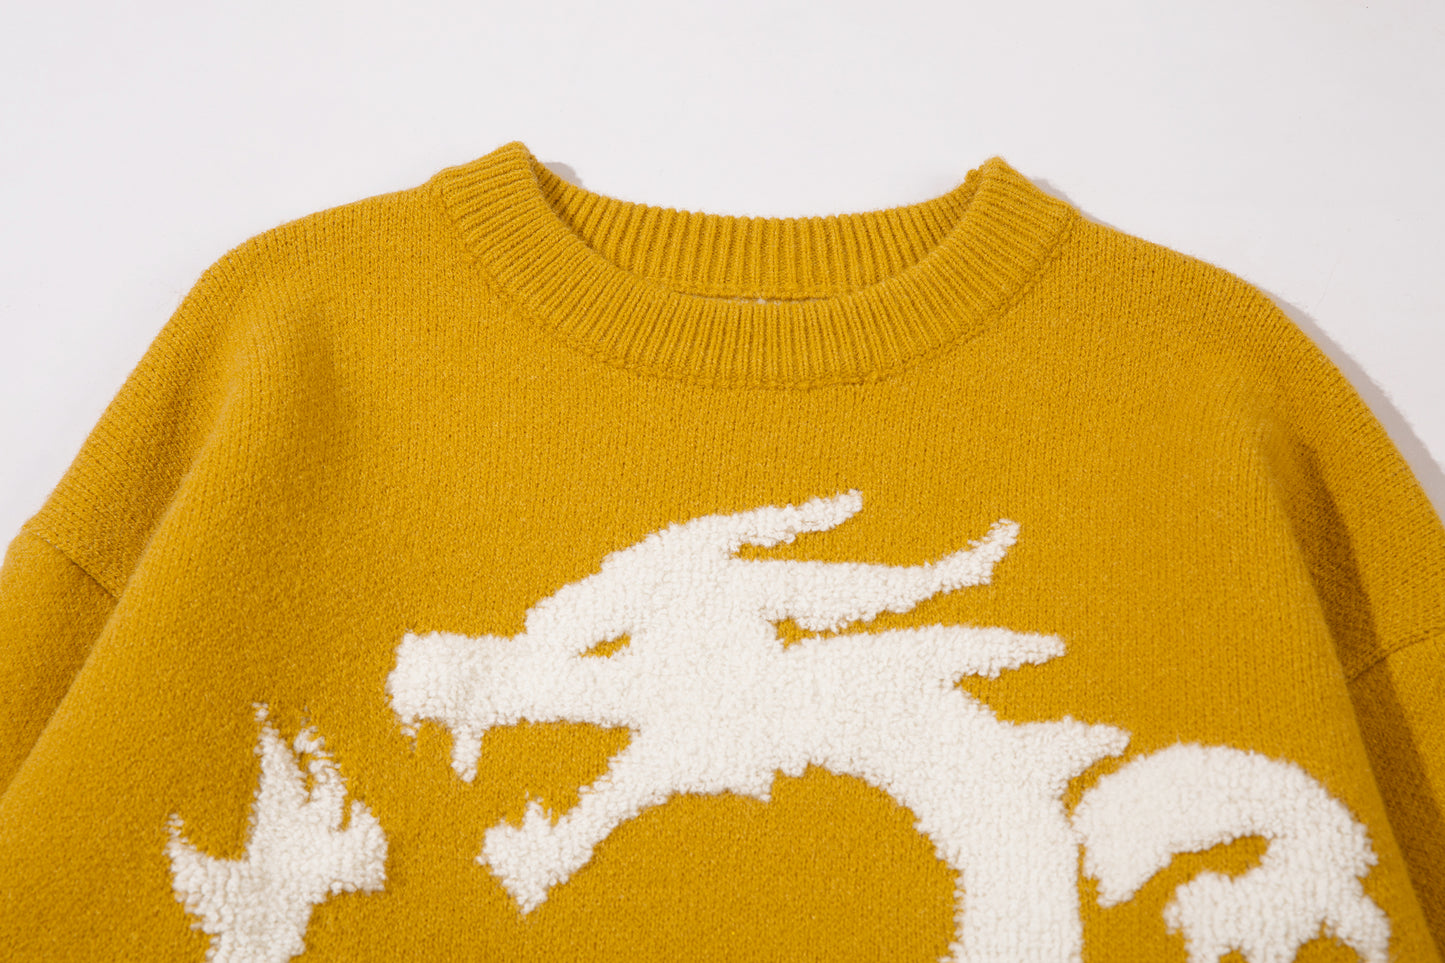 Furious Dragon Sweater